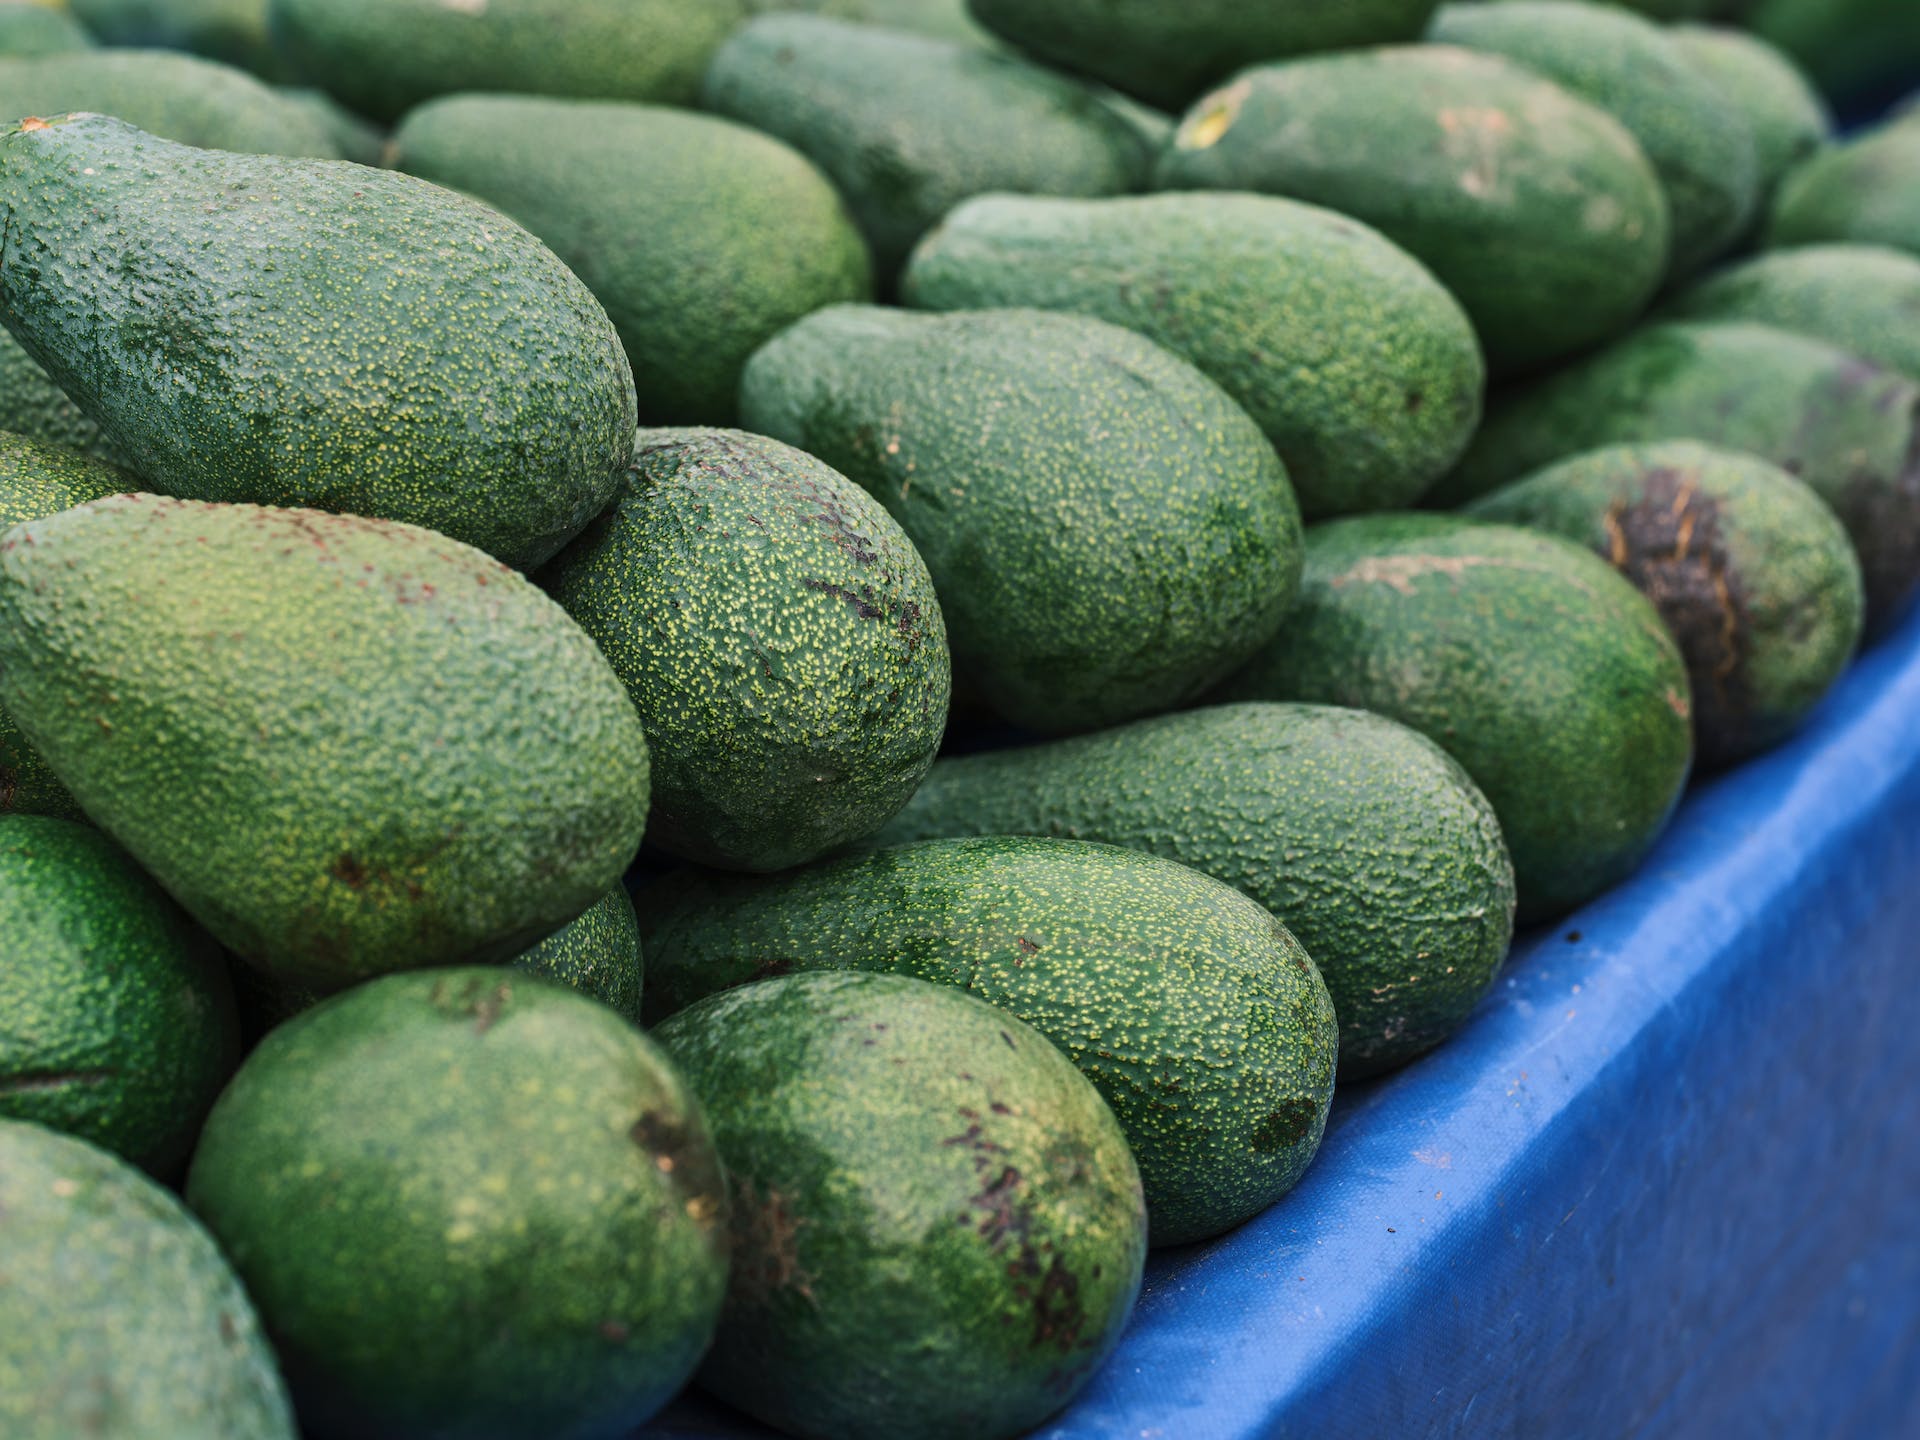 Close-up of avocados | Source: Pexels